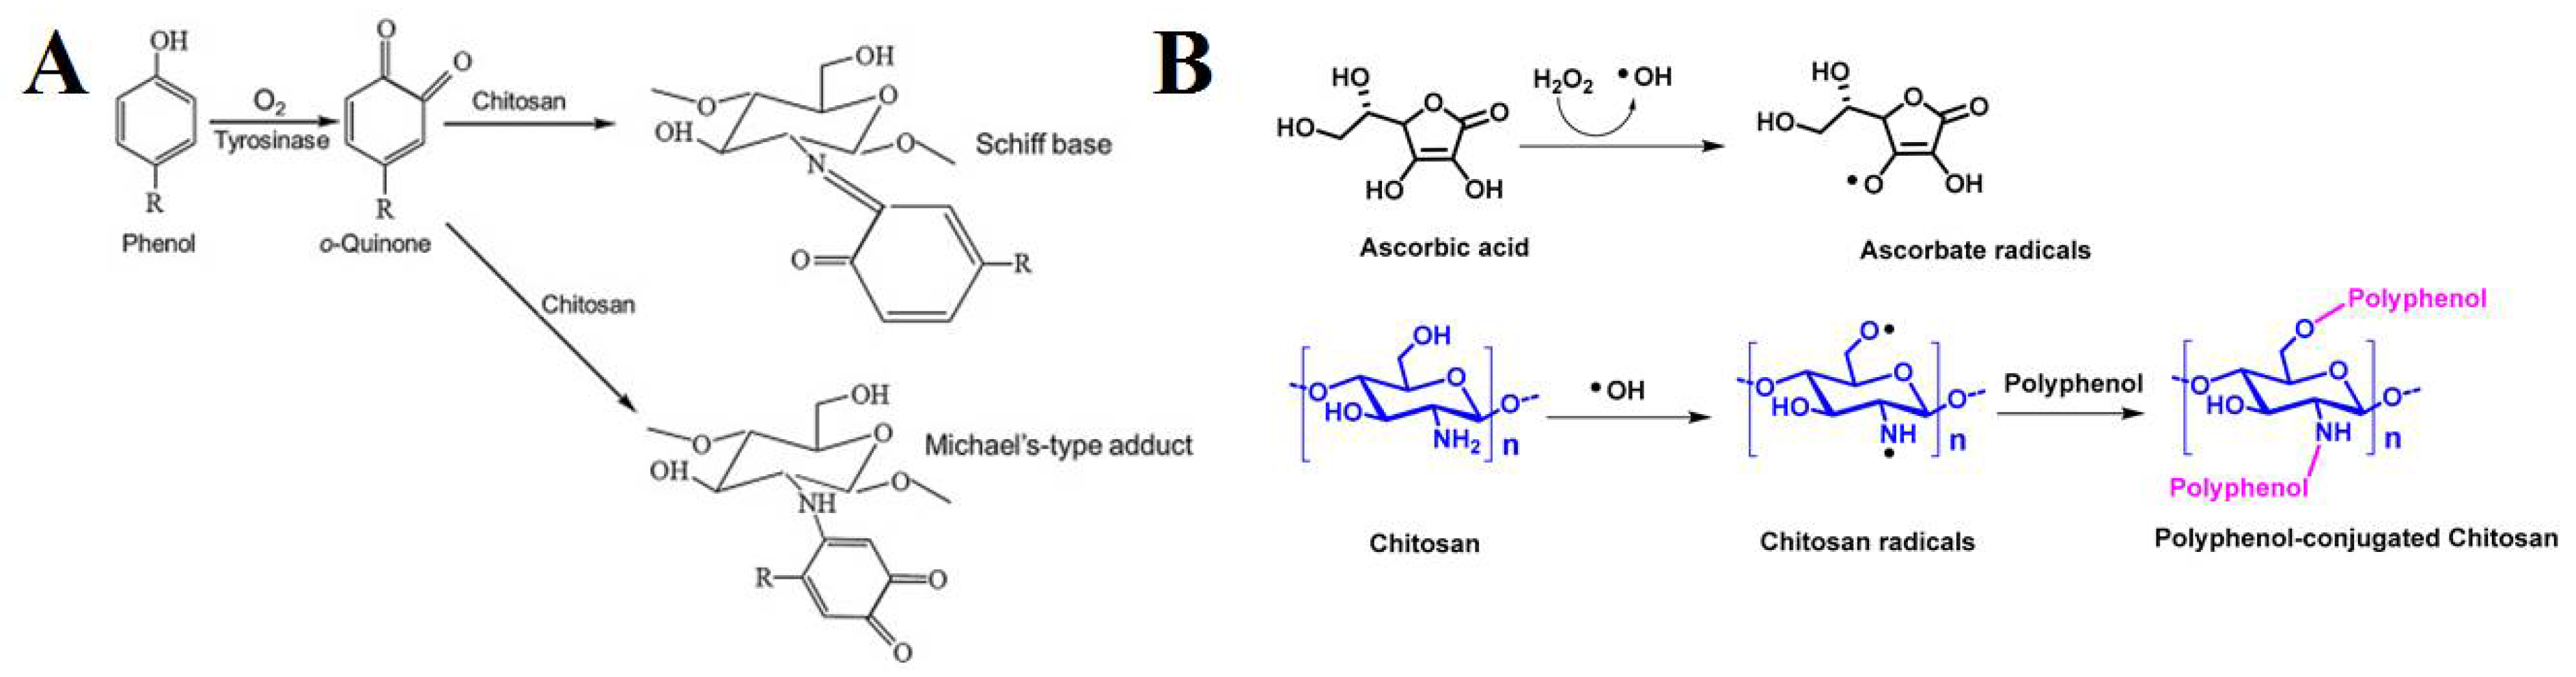 Phenoxyethanol preservative molecule, illustration - Stock Image -  F027/9106 - Science Photo Library